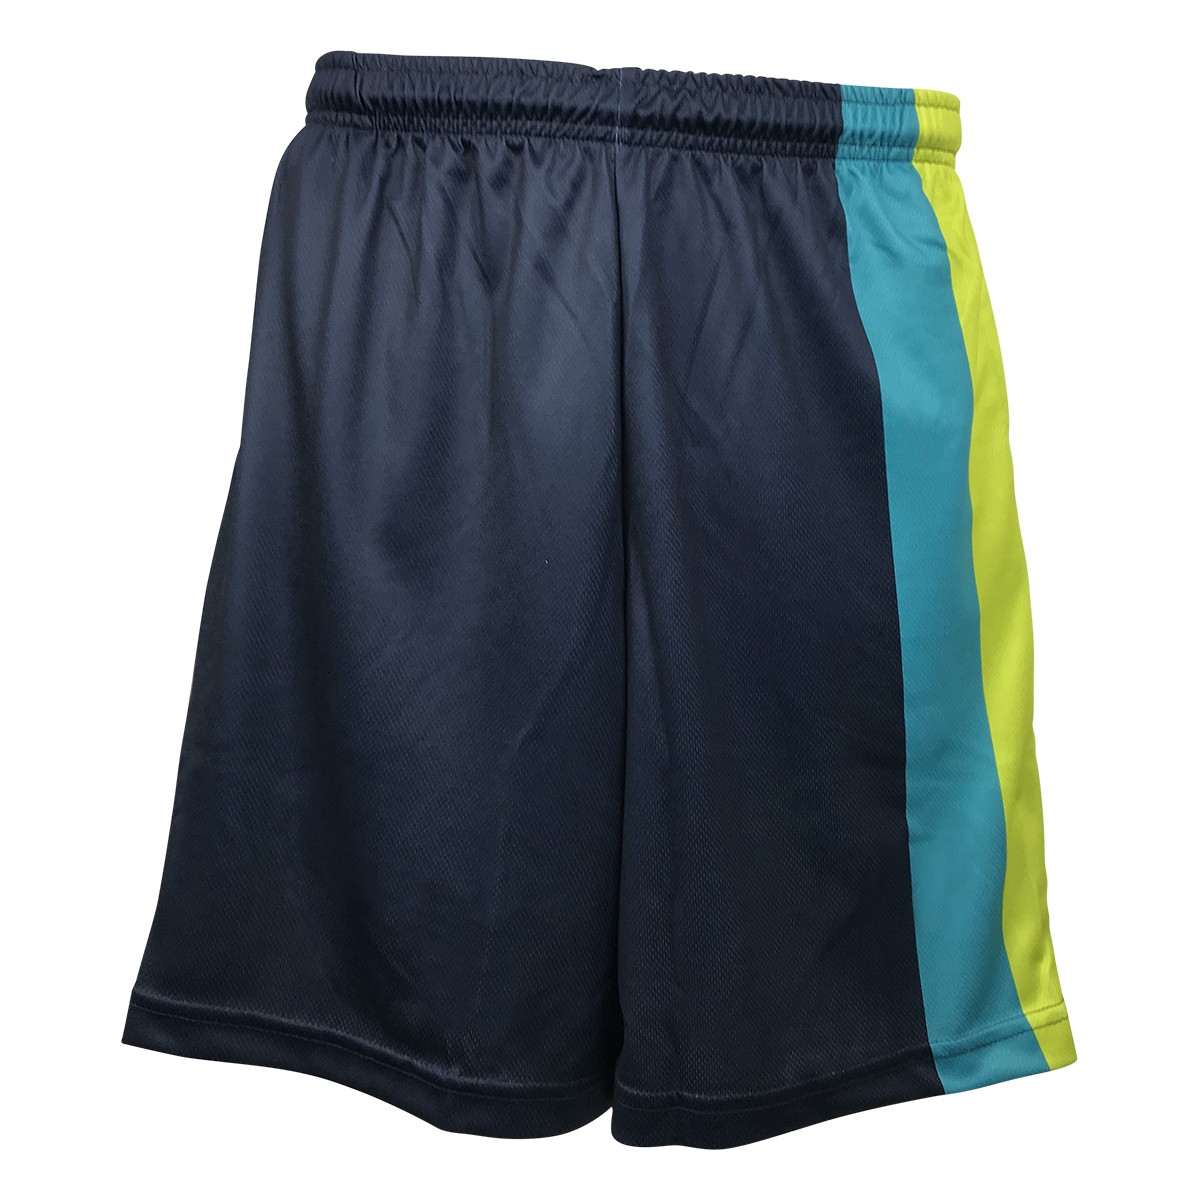 Secondary Sports Shorts - School Locker